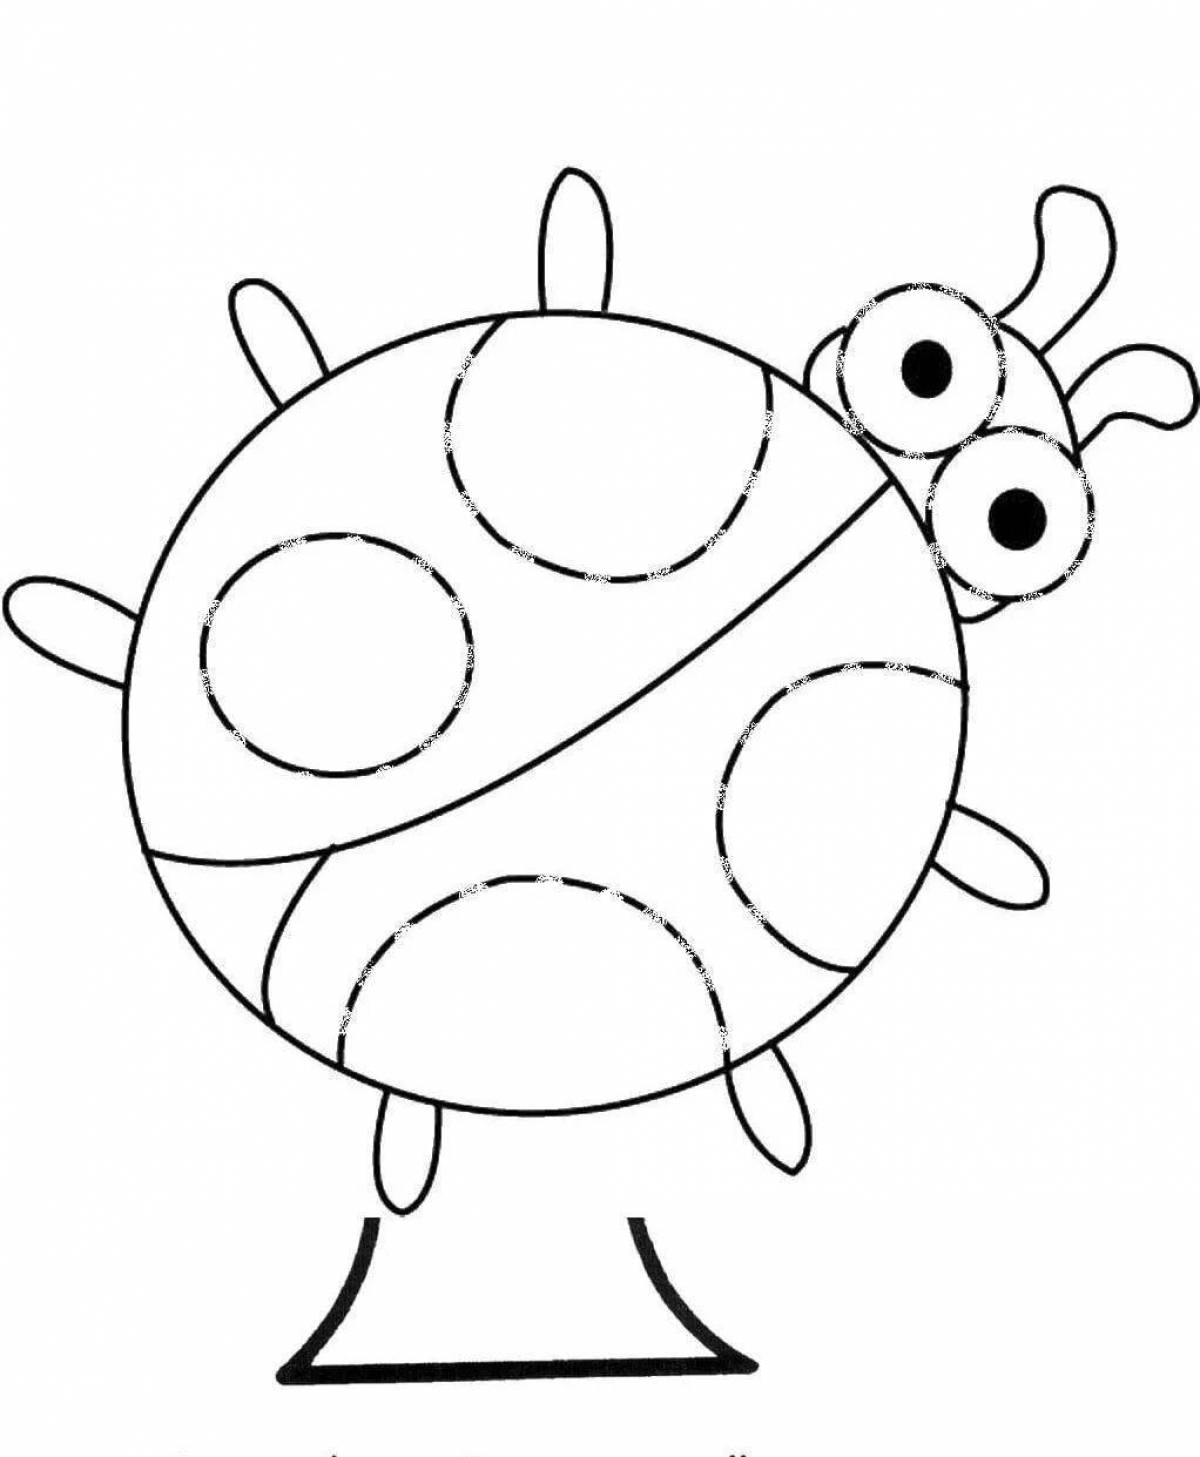 Adorable ladybug coloring book for preschoolers